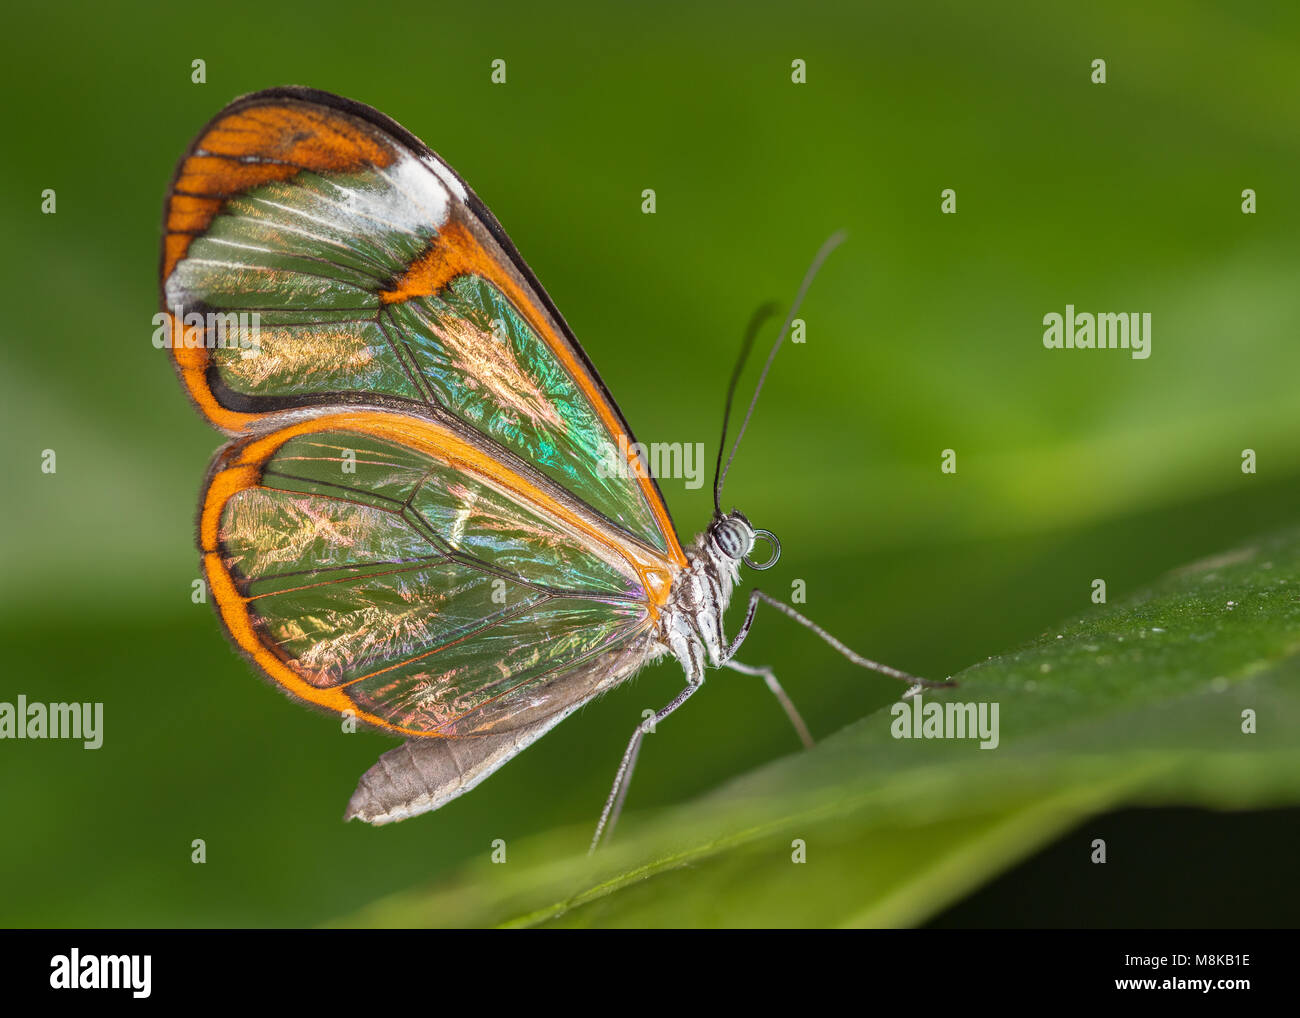 Glasswing butterfly sat on a leaf Stock Photo